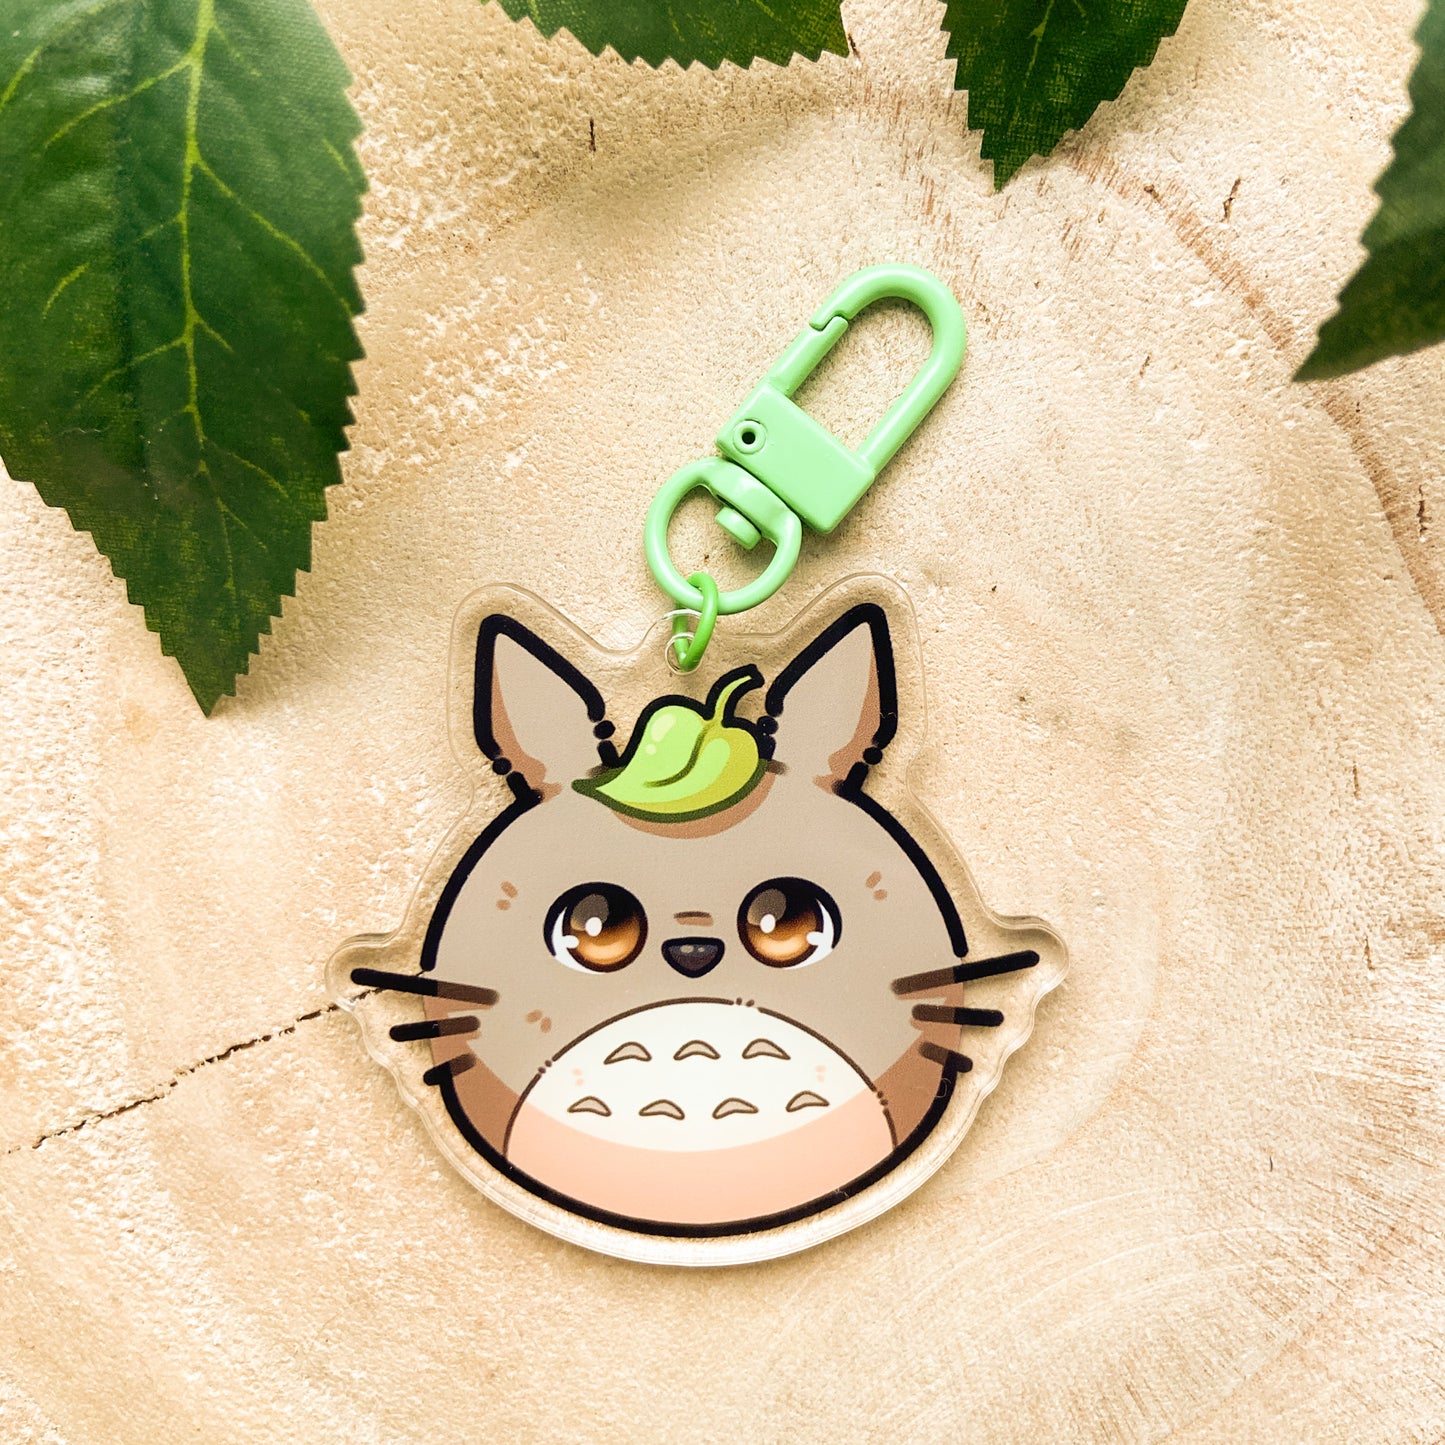 Totoro keychain